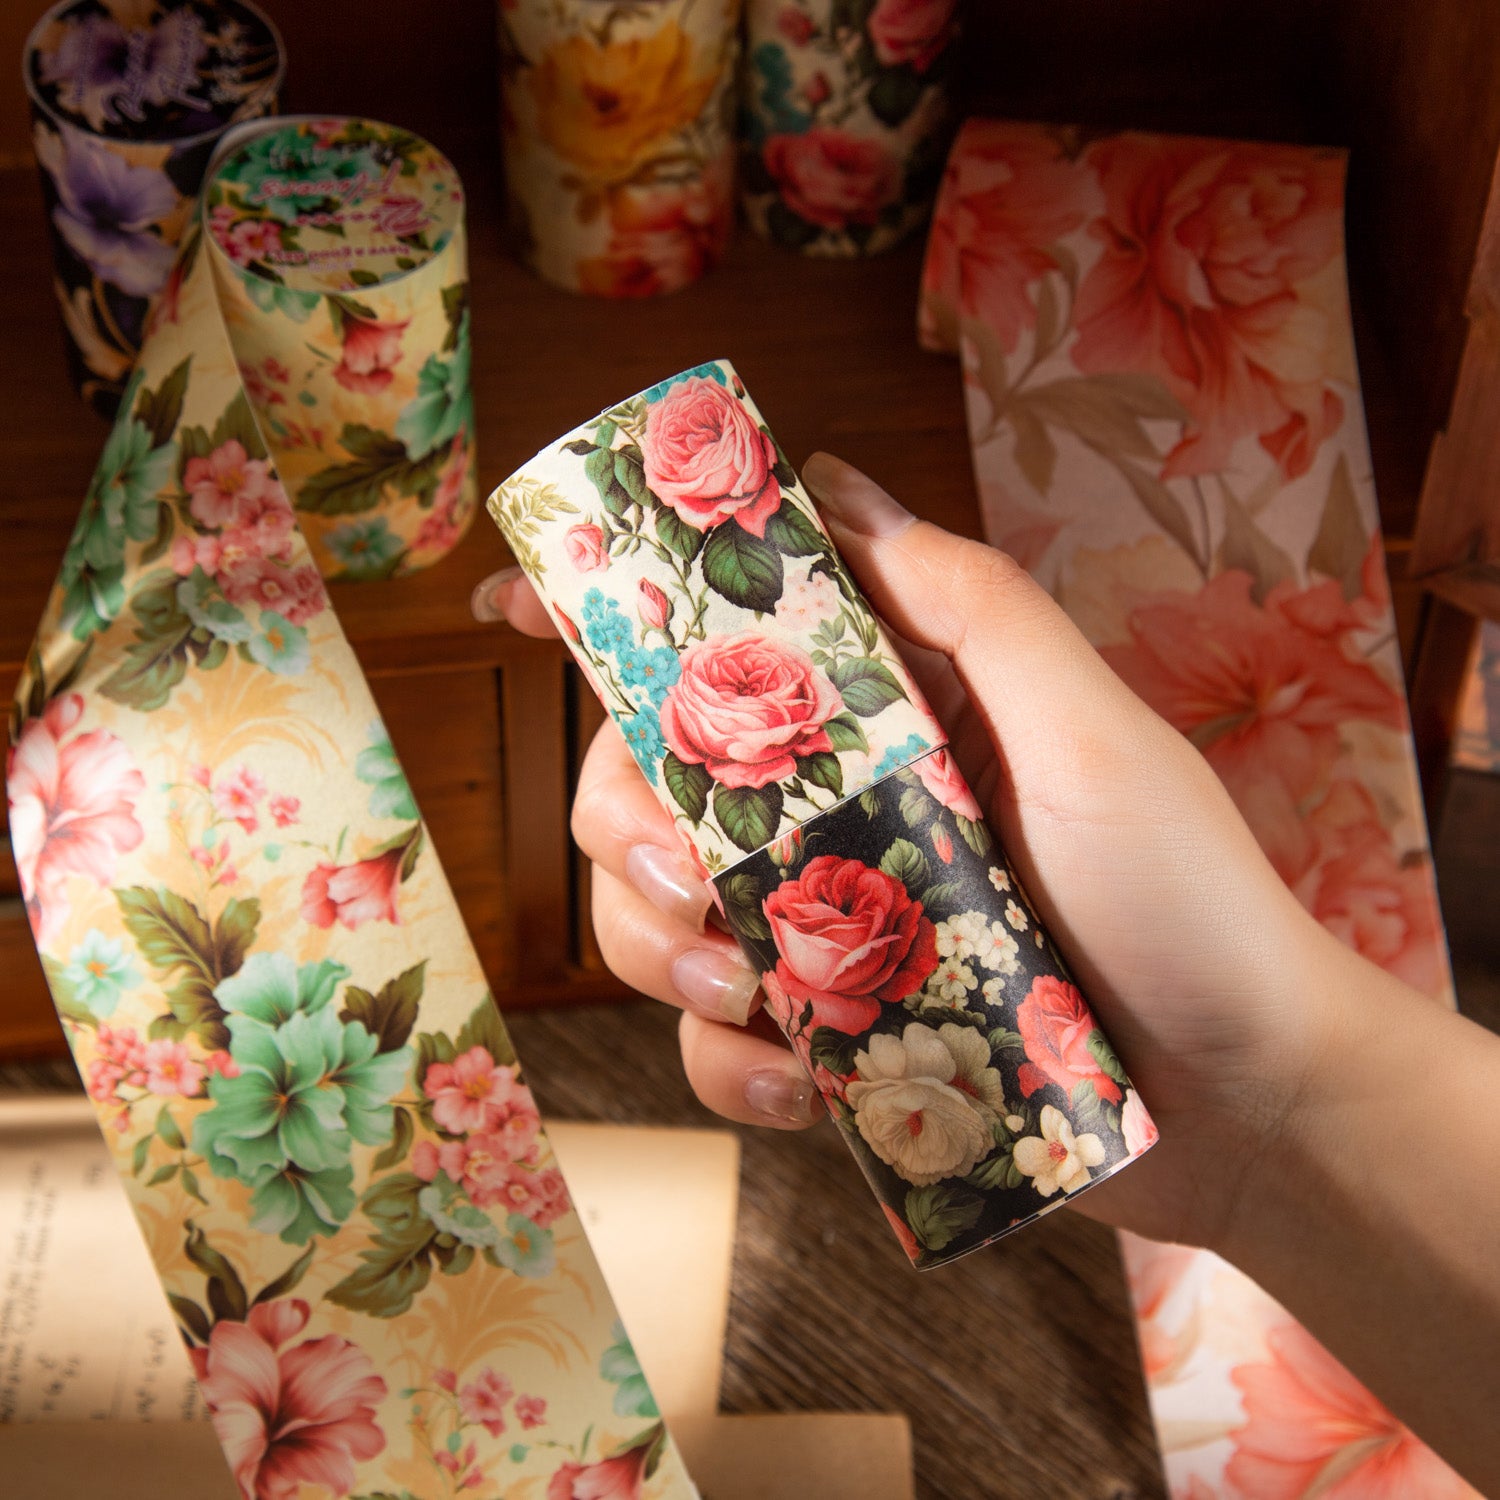 Printed Floral Prints Washi Tape